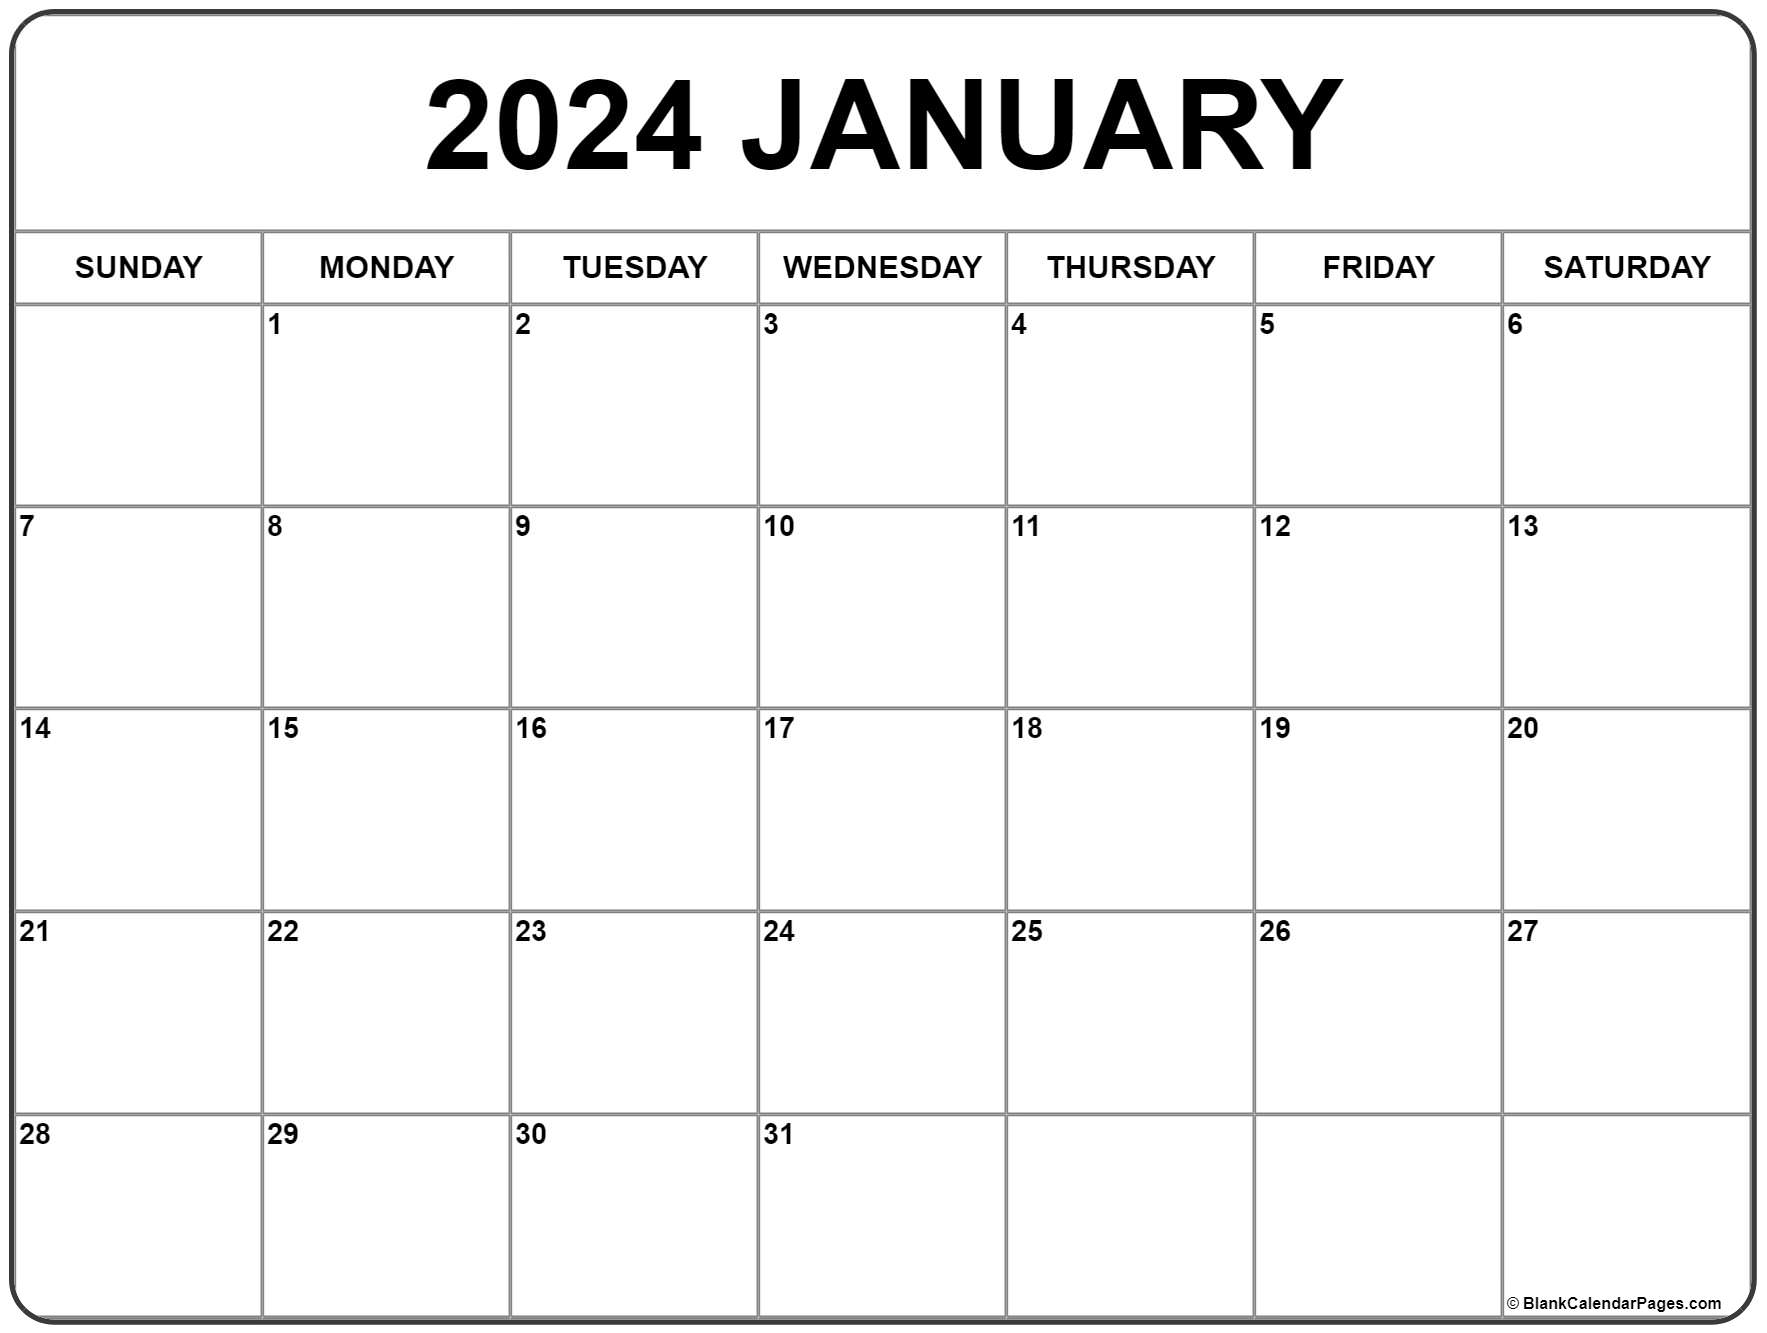 Print Blank 2022 Calendar January 2022 Calendar | Free Printable Calendar Templates